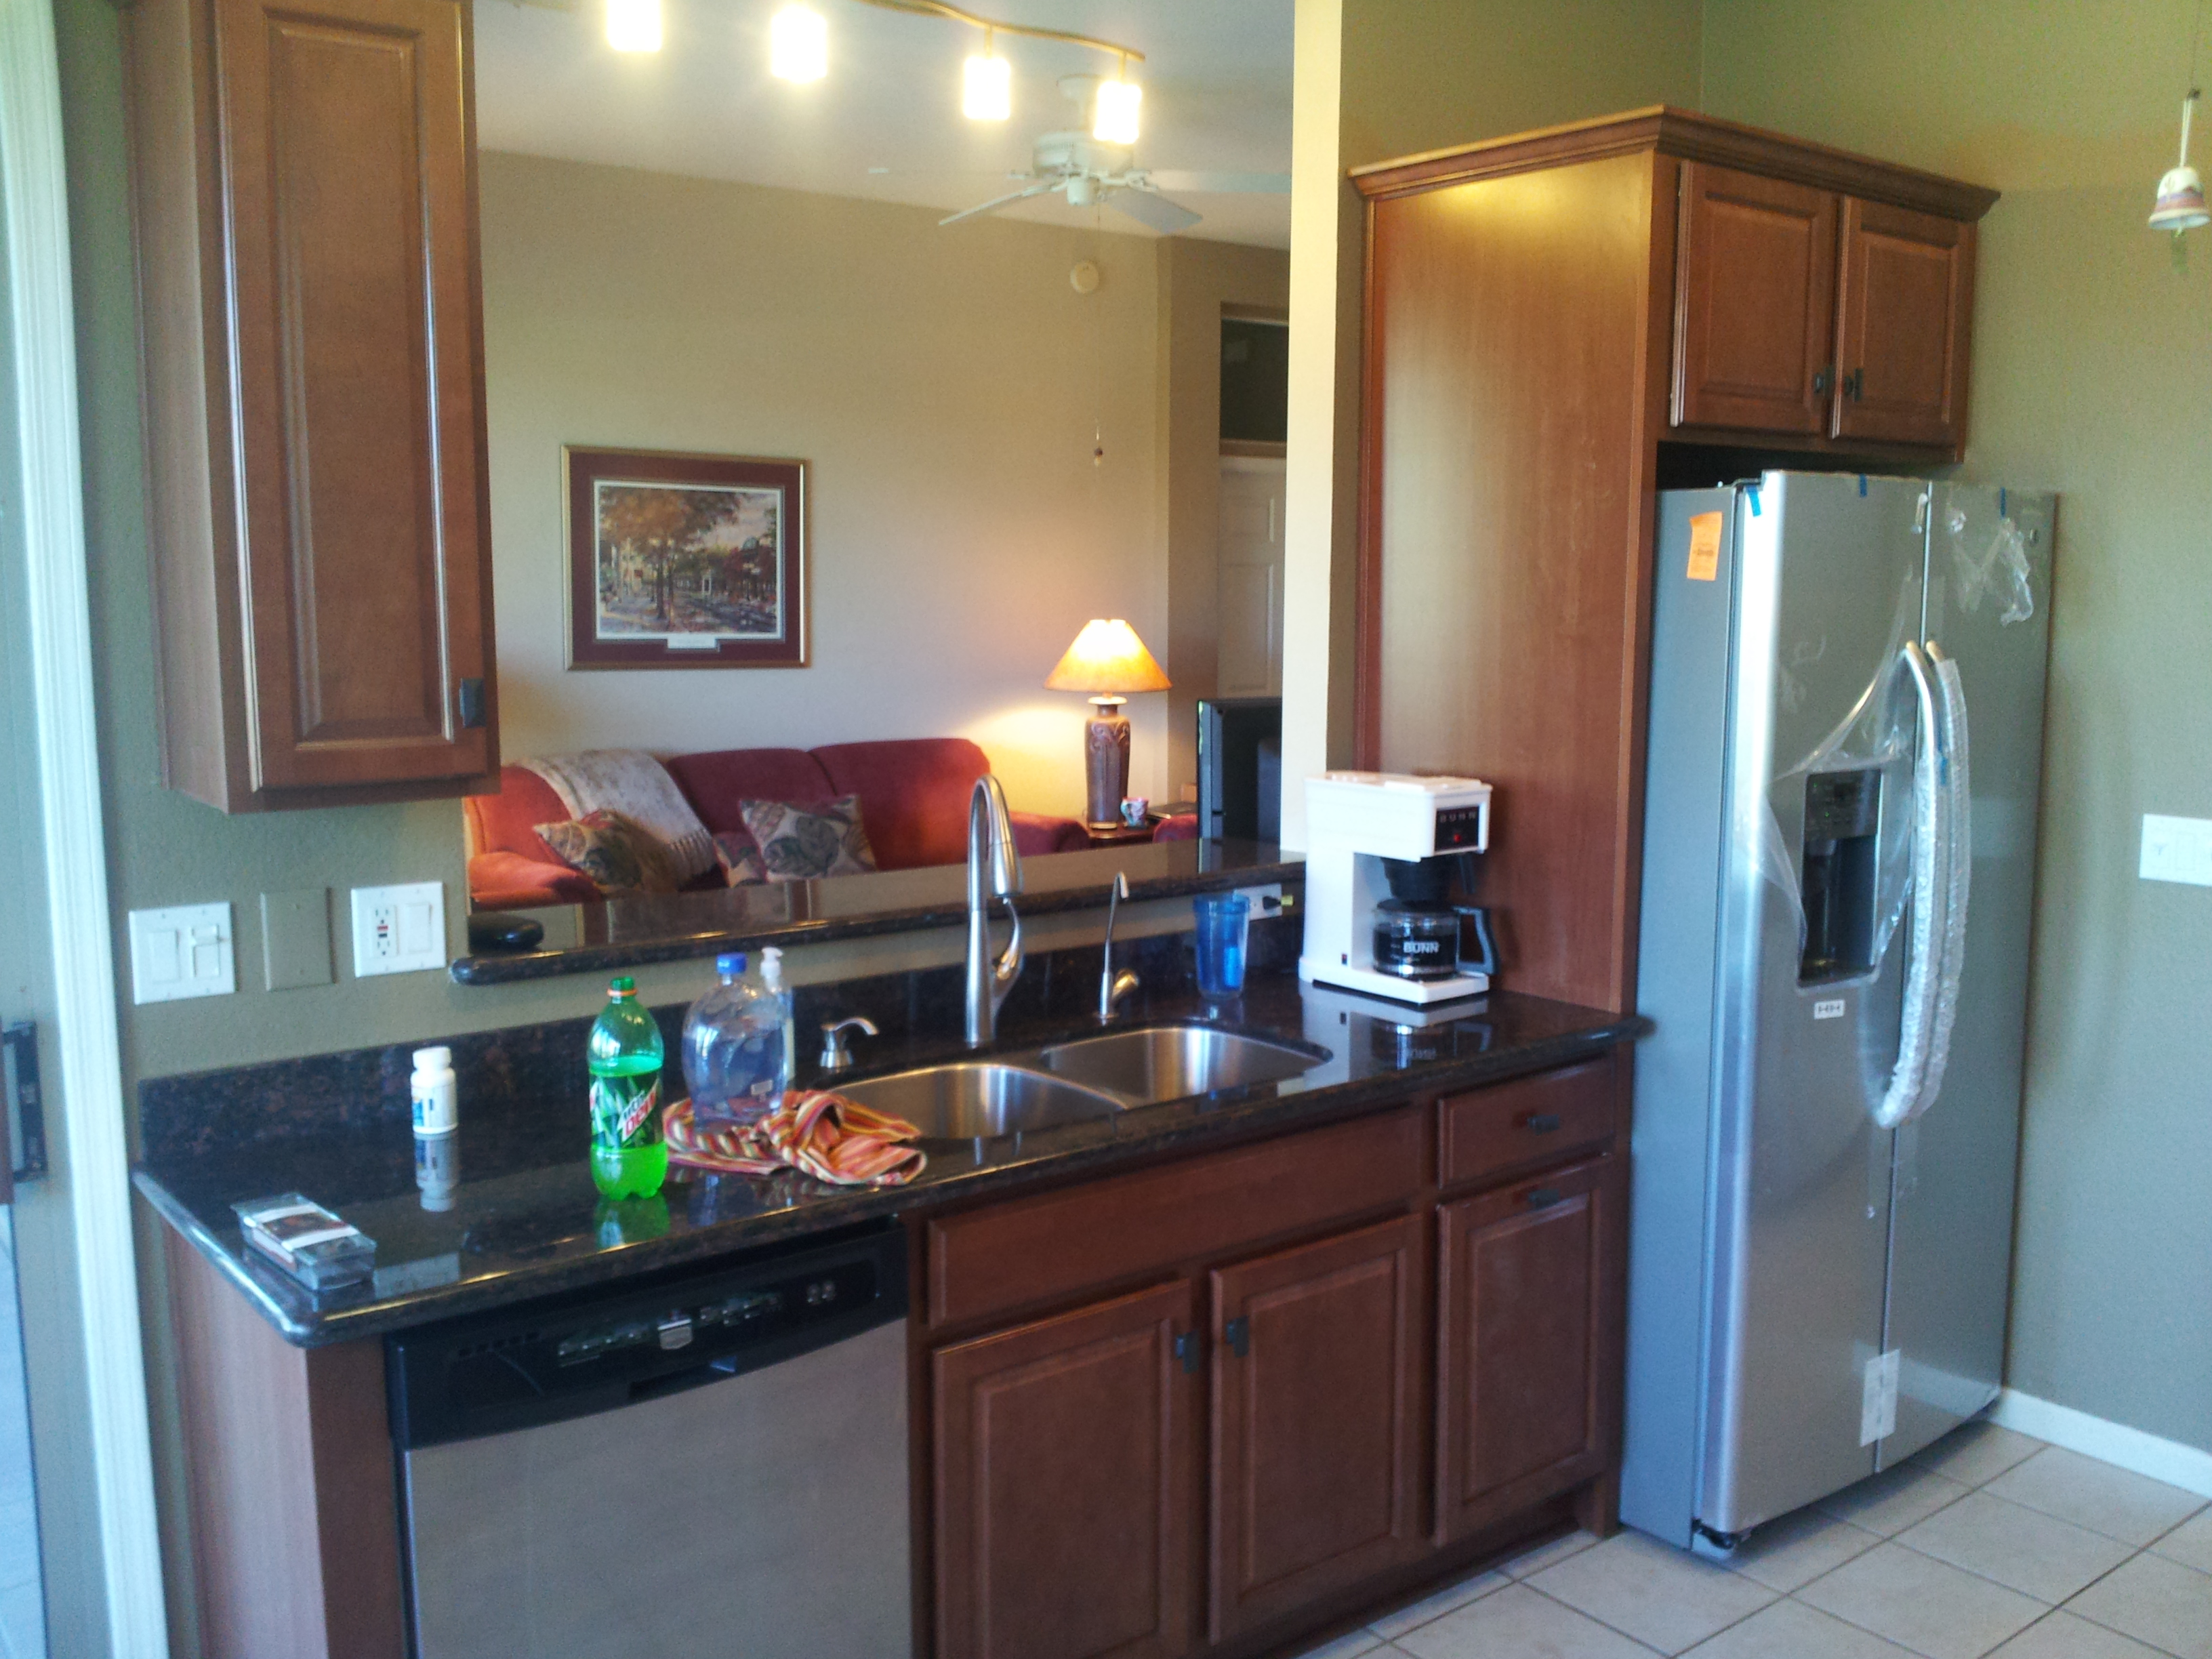 countertops | Phoenix AZ Kitchen Cabinet Home Remodeling Contractor